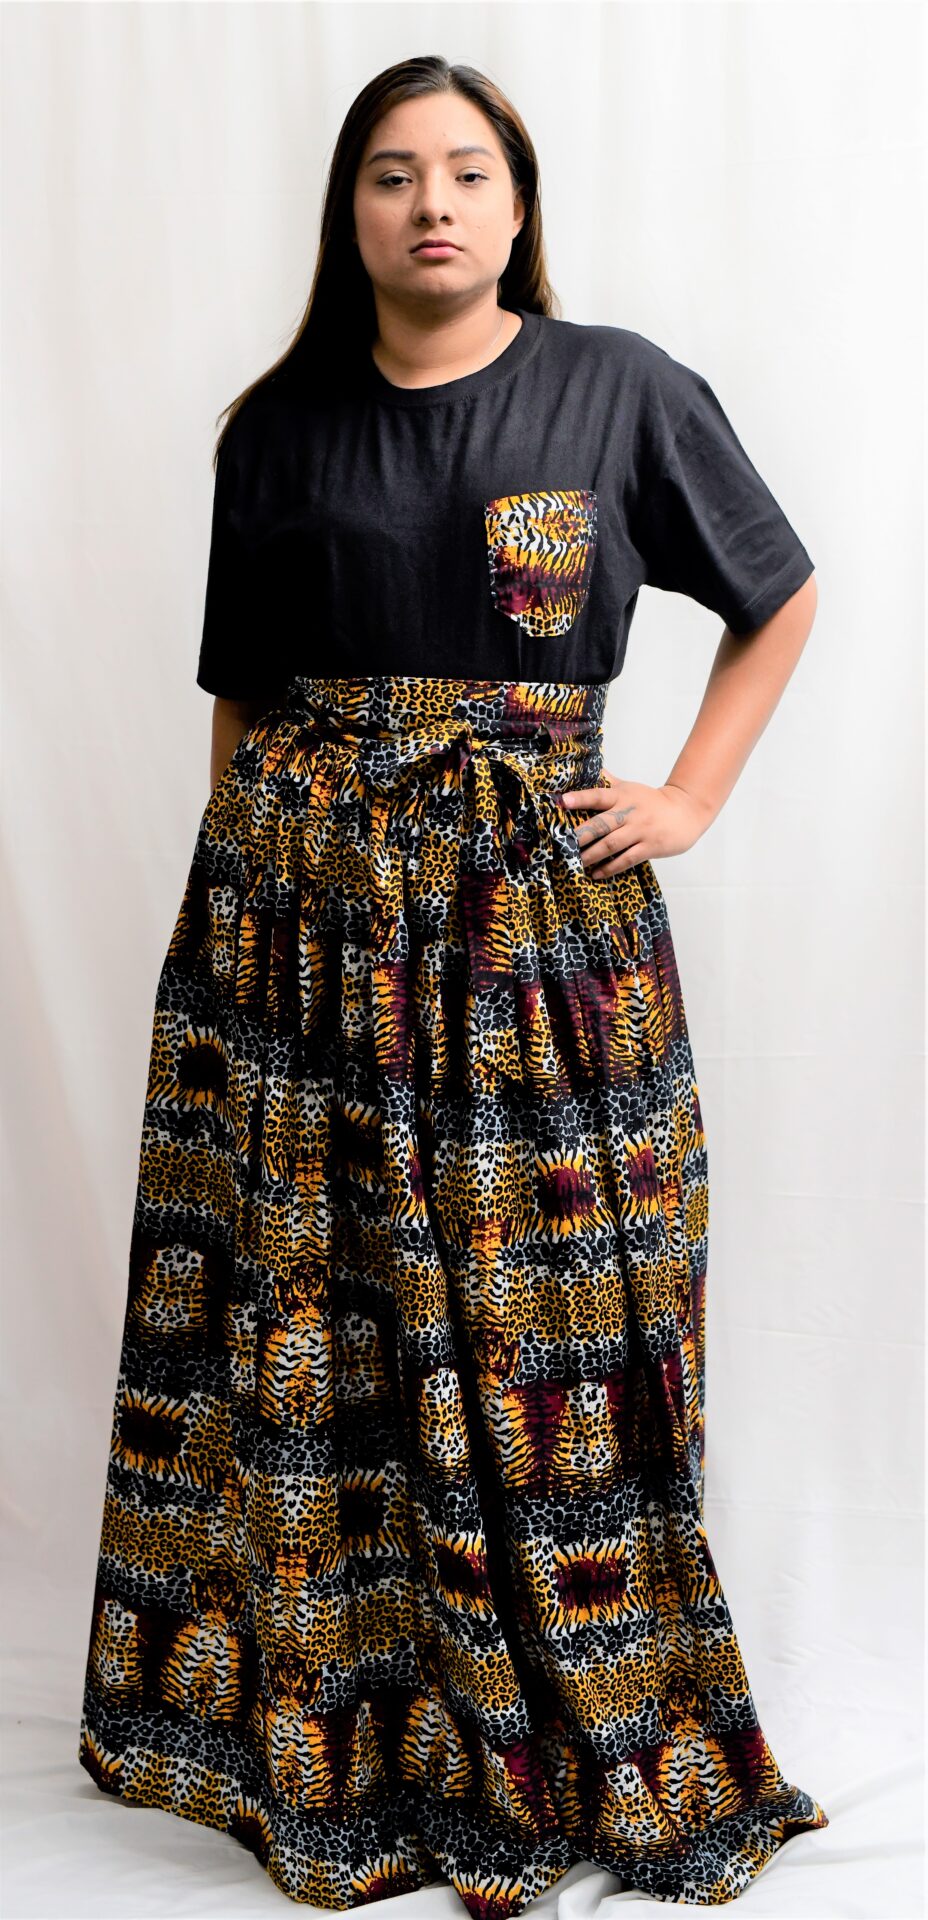 High-Waist Skirt with African Tiger Print - Sante Wear Inc.